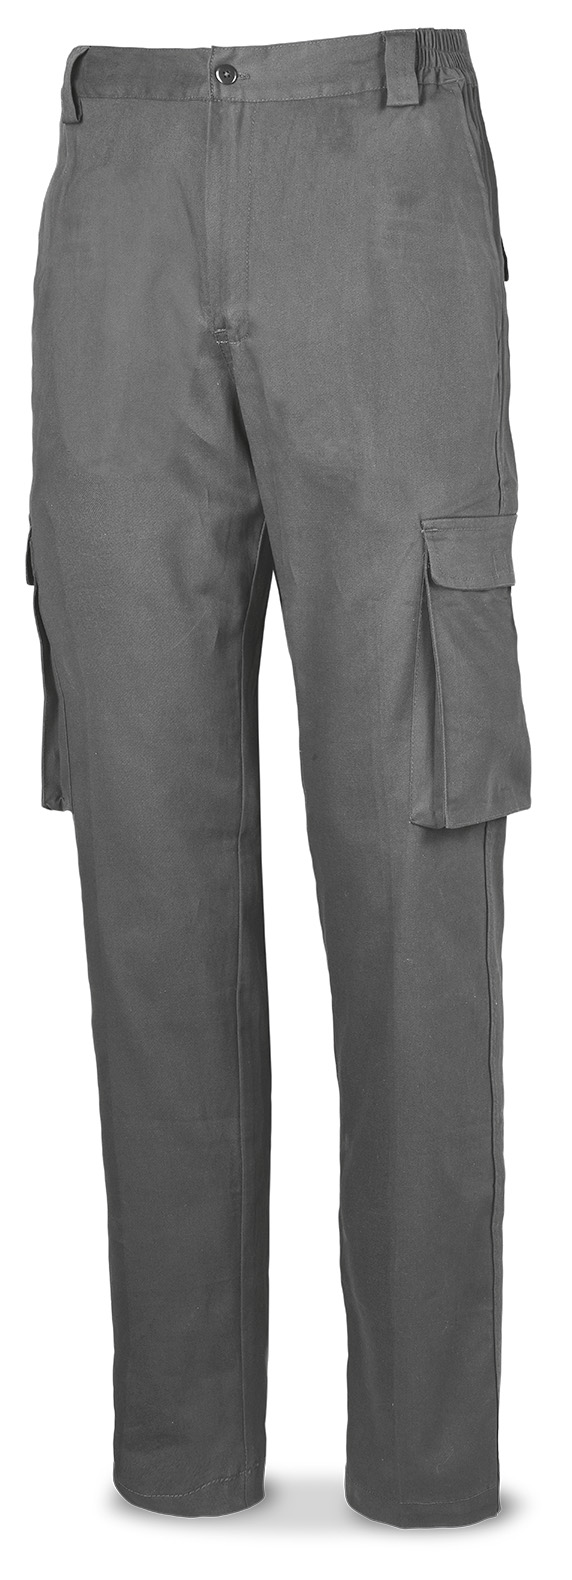 588-PBSG Vestuario Laboral Serie Casual Pantalón STRETCH básico gris algodón 240 gr.